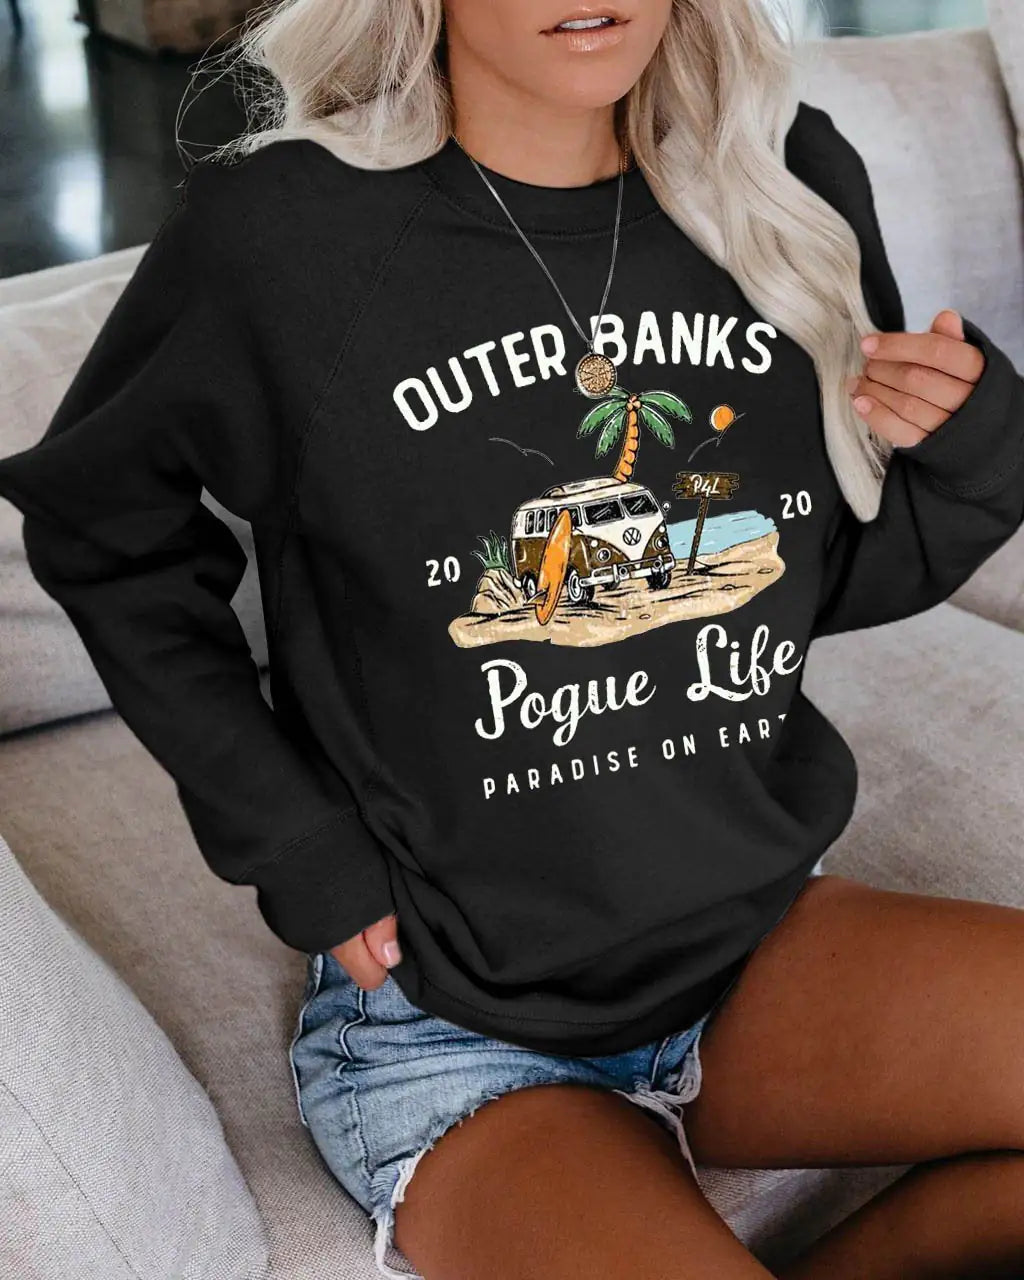 Women's "Outer Banks" Sweatshirt